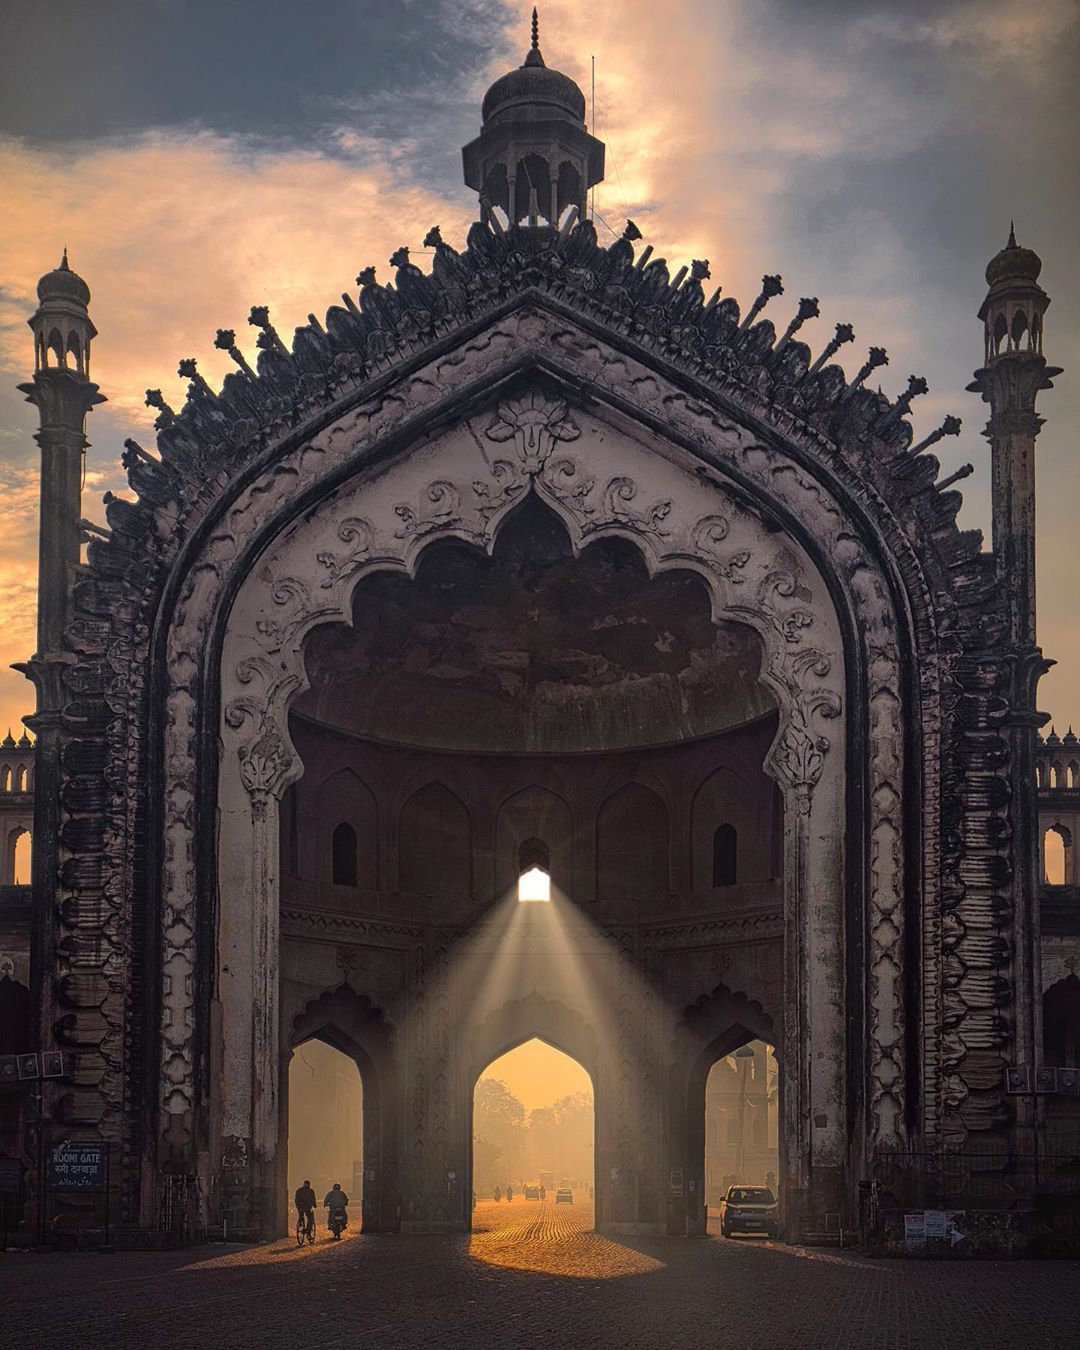 Savad on Instagram: “Rumi Darwaza gives Lucknow a celebratory feel